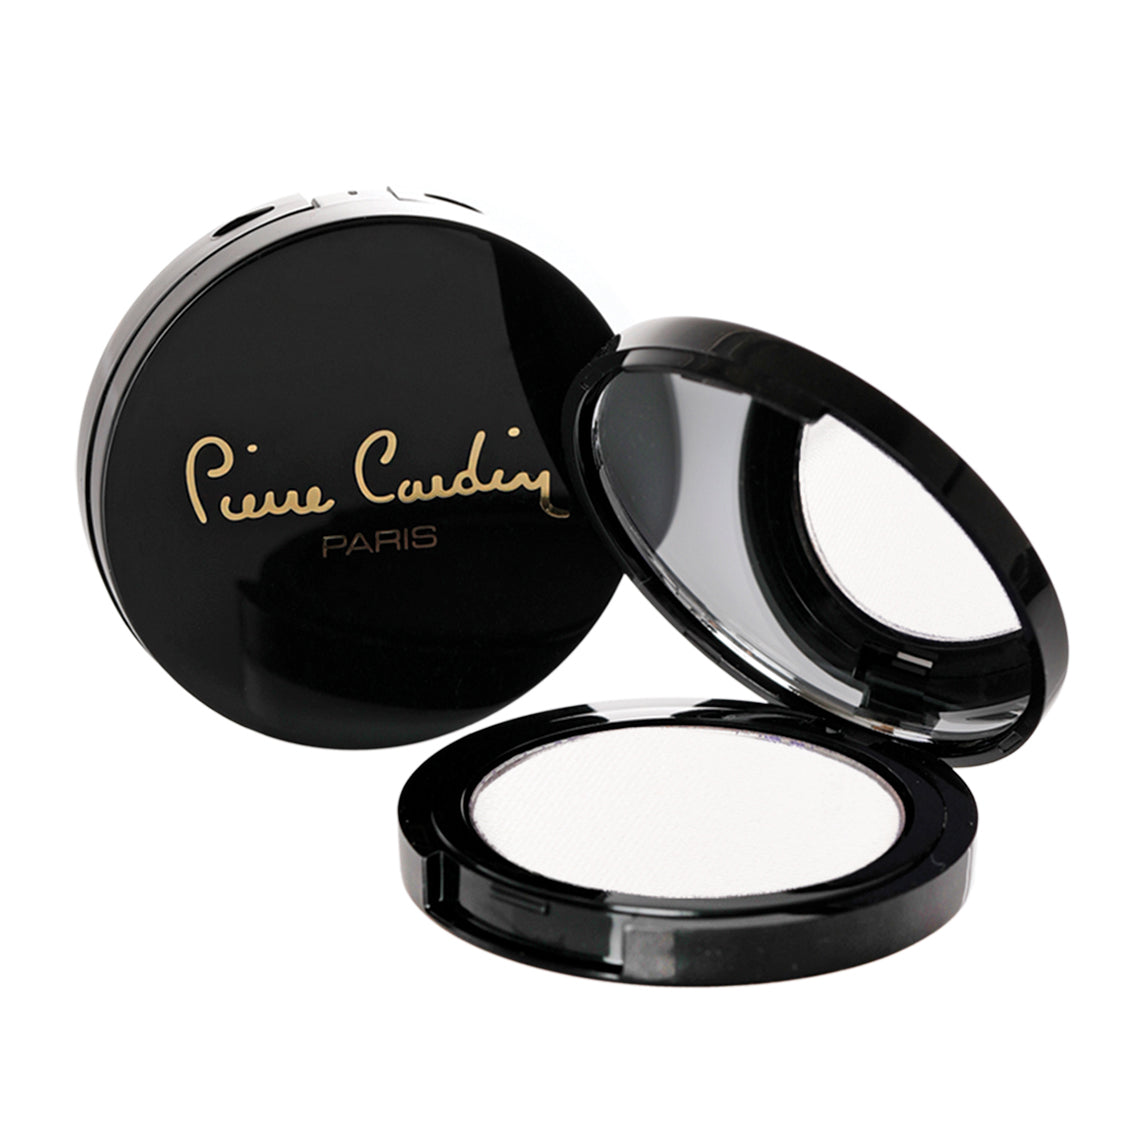 Pierre Cardin Pearly Velvet Eyeshadow Snow White 870 - 4,0 gr